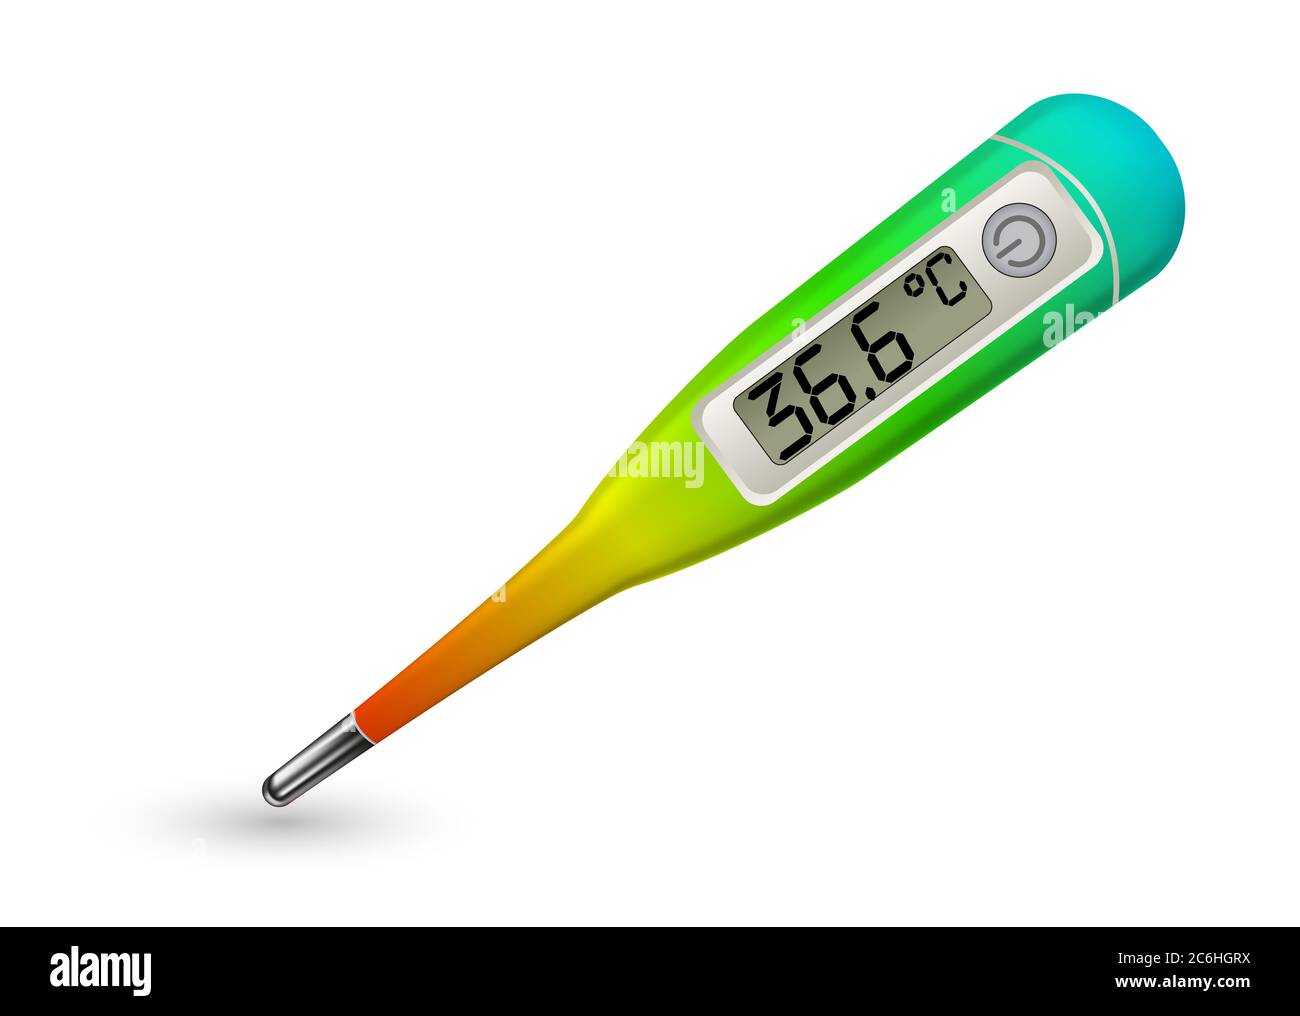 https://c8.alamy.com/comp/2C6HGRX/medical-digital-thermometer-temperature-measurement-health-recovery-366-2C6HGRX.jpg